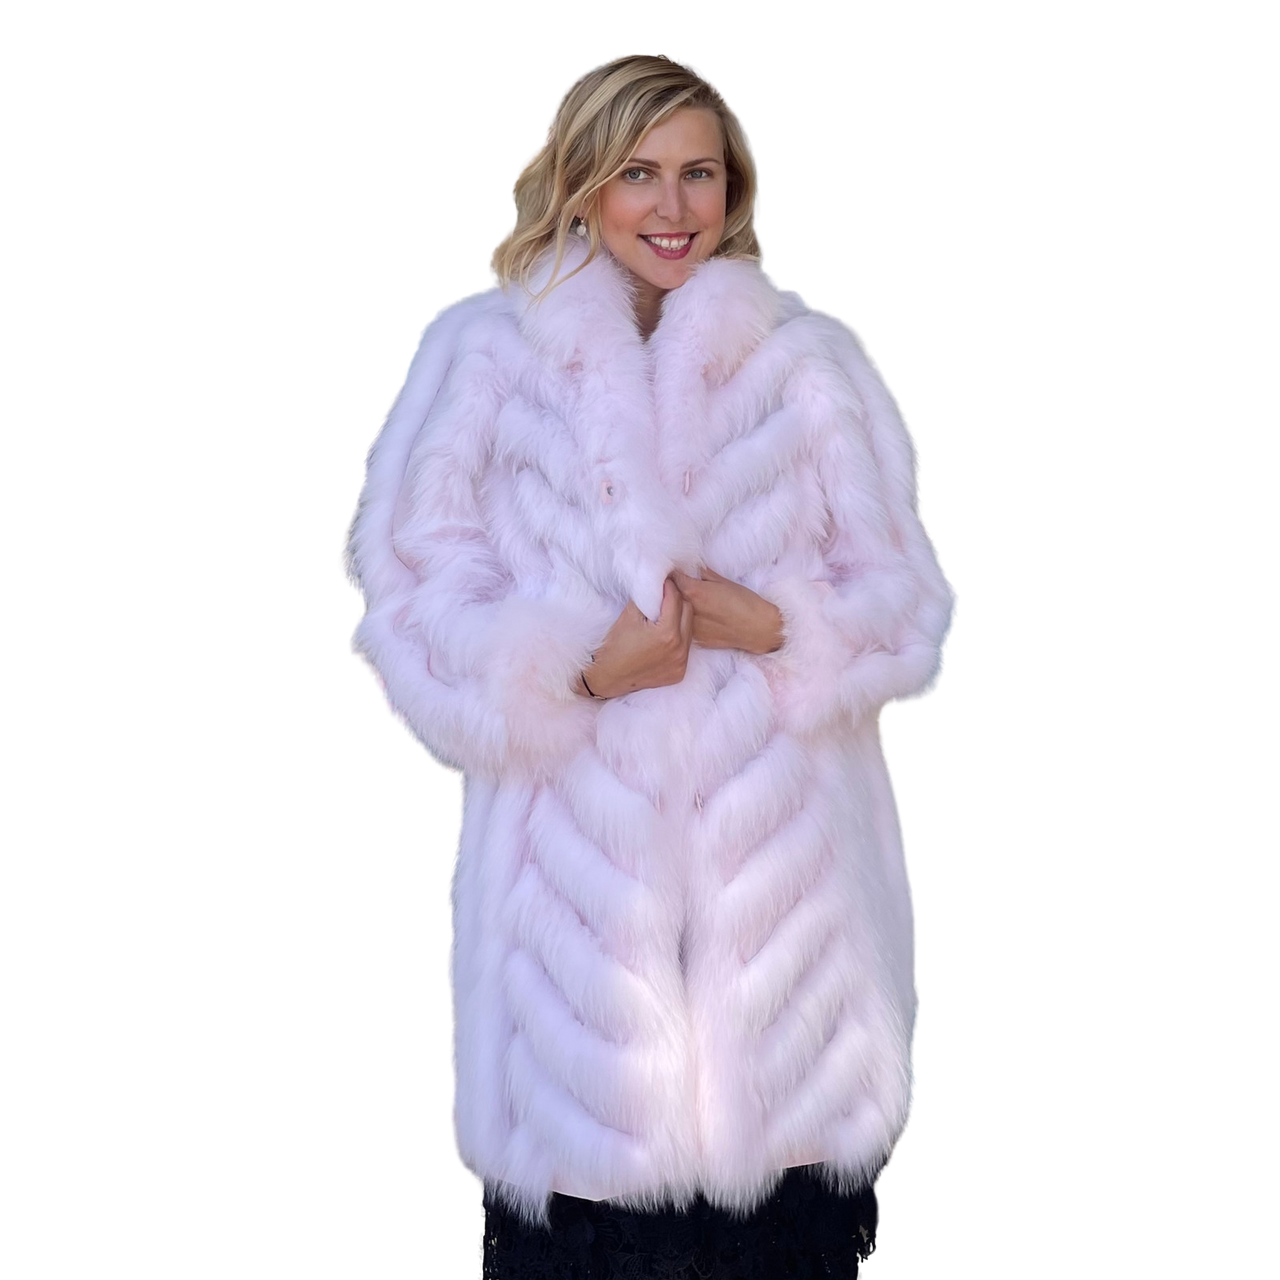 LV fur coat - pink